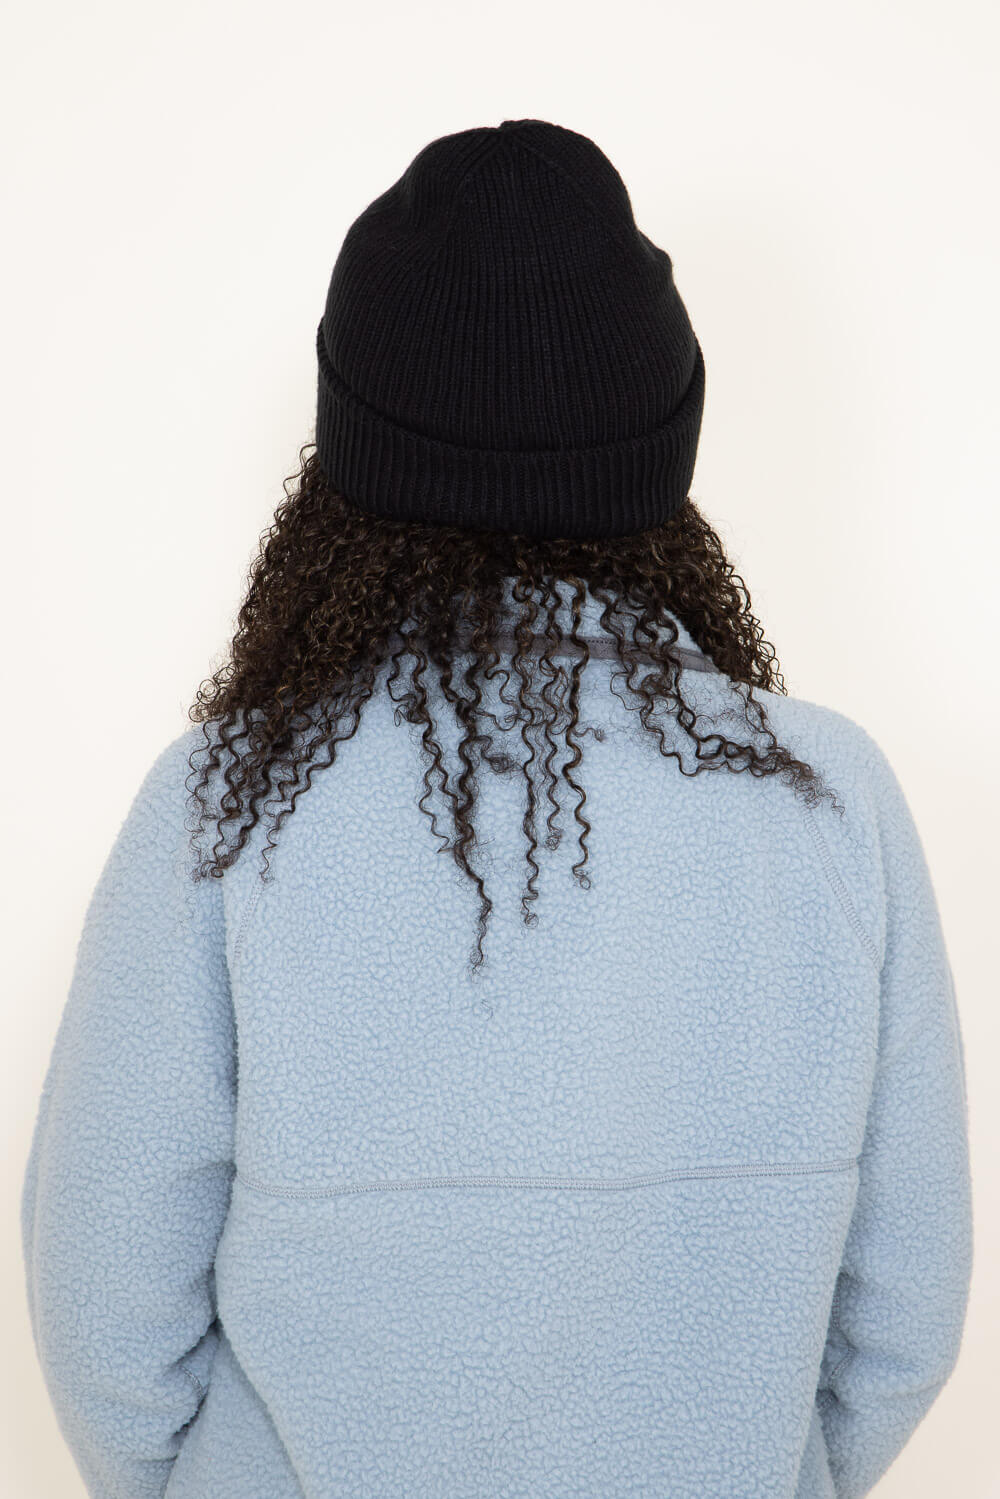 Carhartt Fleece Quarter Snap Front Pullover for Women in Blue